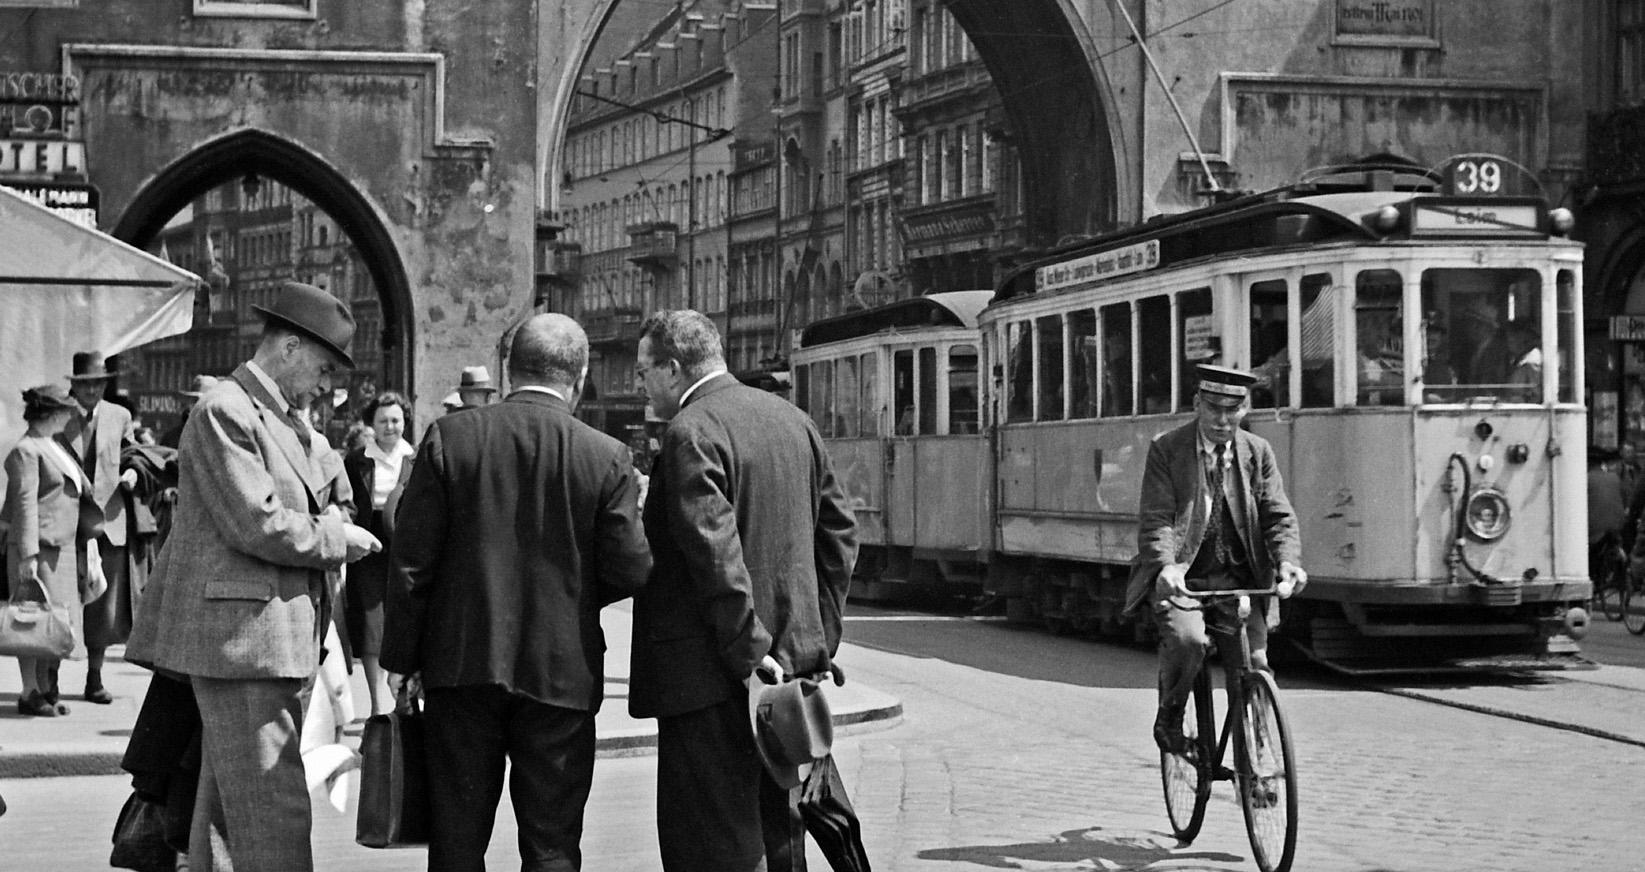 Tram at Karlstor gate inner city Munich, Germany 1937, Printed Later - Photograph by Karl Heinrich Lämmel